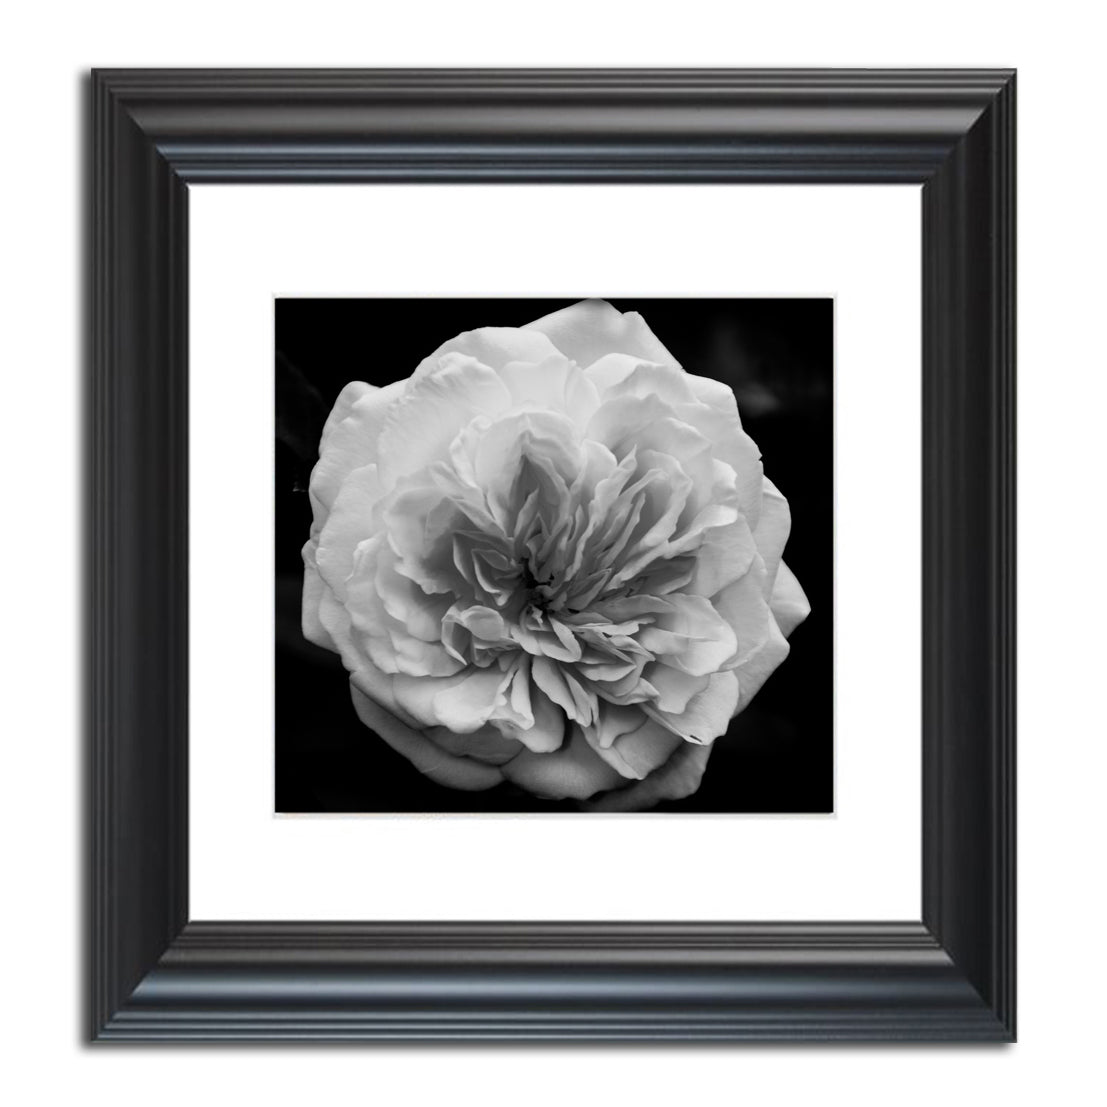 Living Room Nature Art: Alchymist Rose Black & White - Square  Nature / Floral Photo Fine Art & Unframed Wall Art Prints  - PIPAFINEART